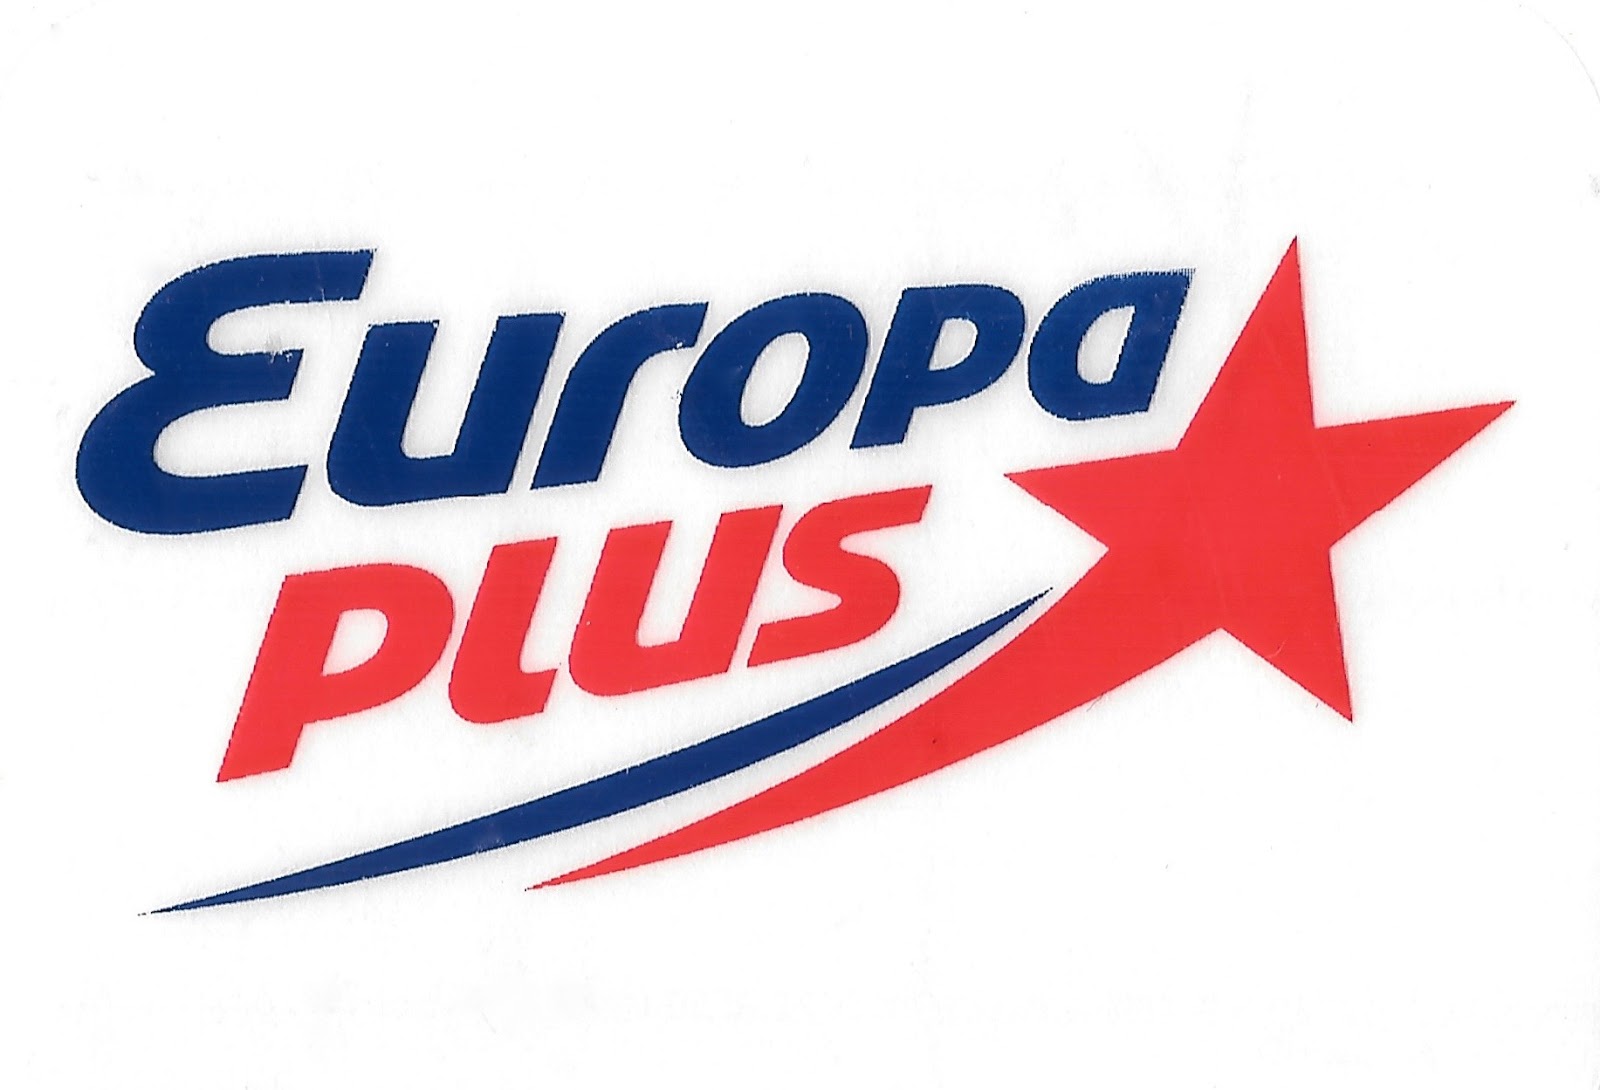 Europa plus 40. Европа плюс. Европа плюс топ 40. Европа плюс 1990. Европа плюс логотип.